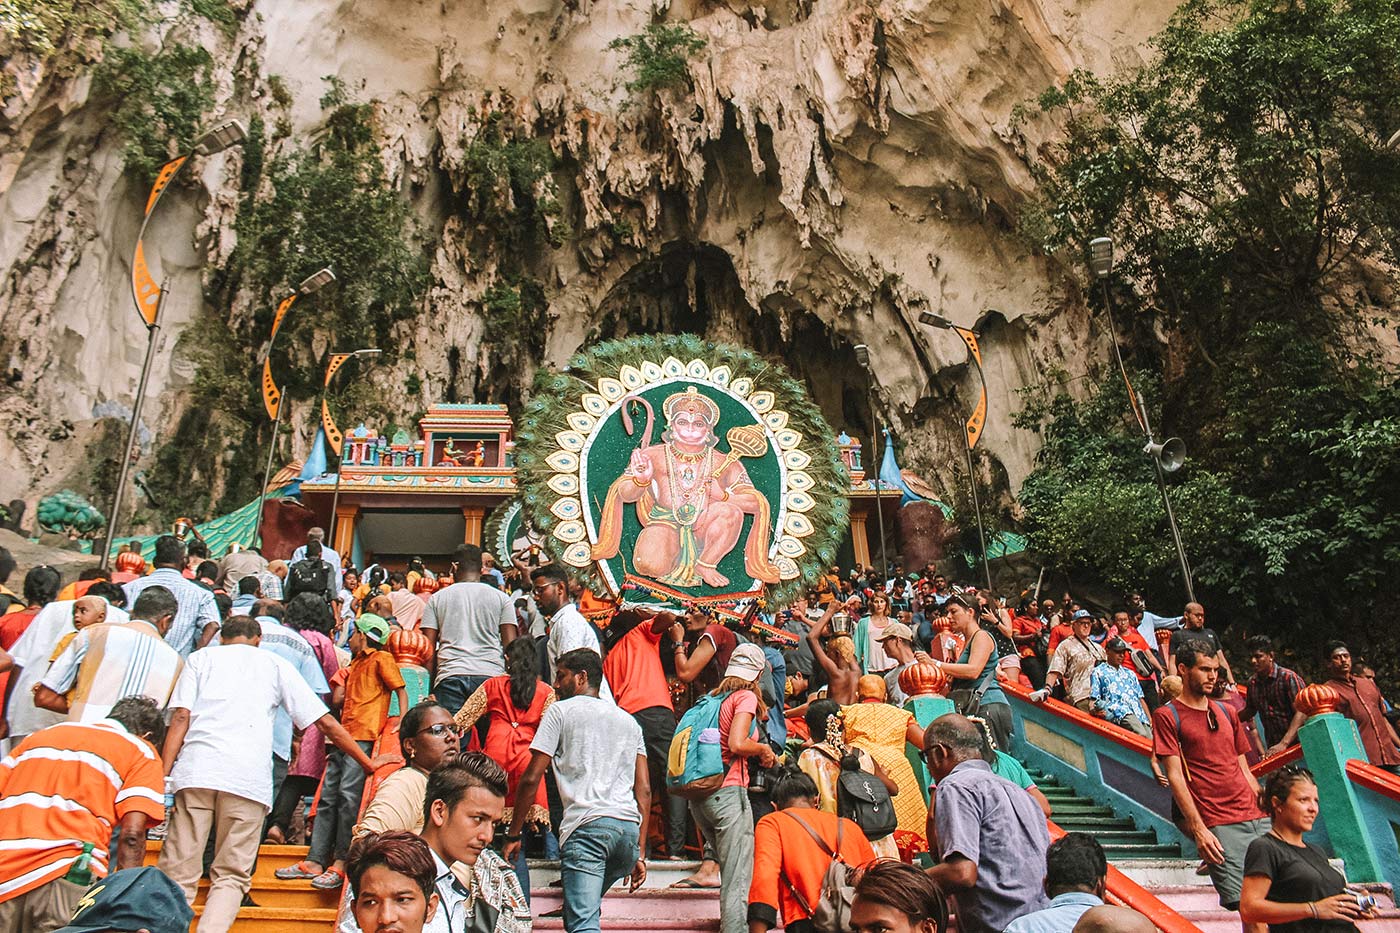 Visiting Batu Caves in Kuala Lumpur for the Thaipusam Festival blog post 2019